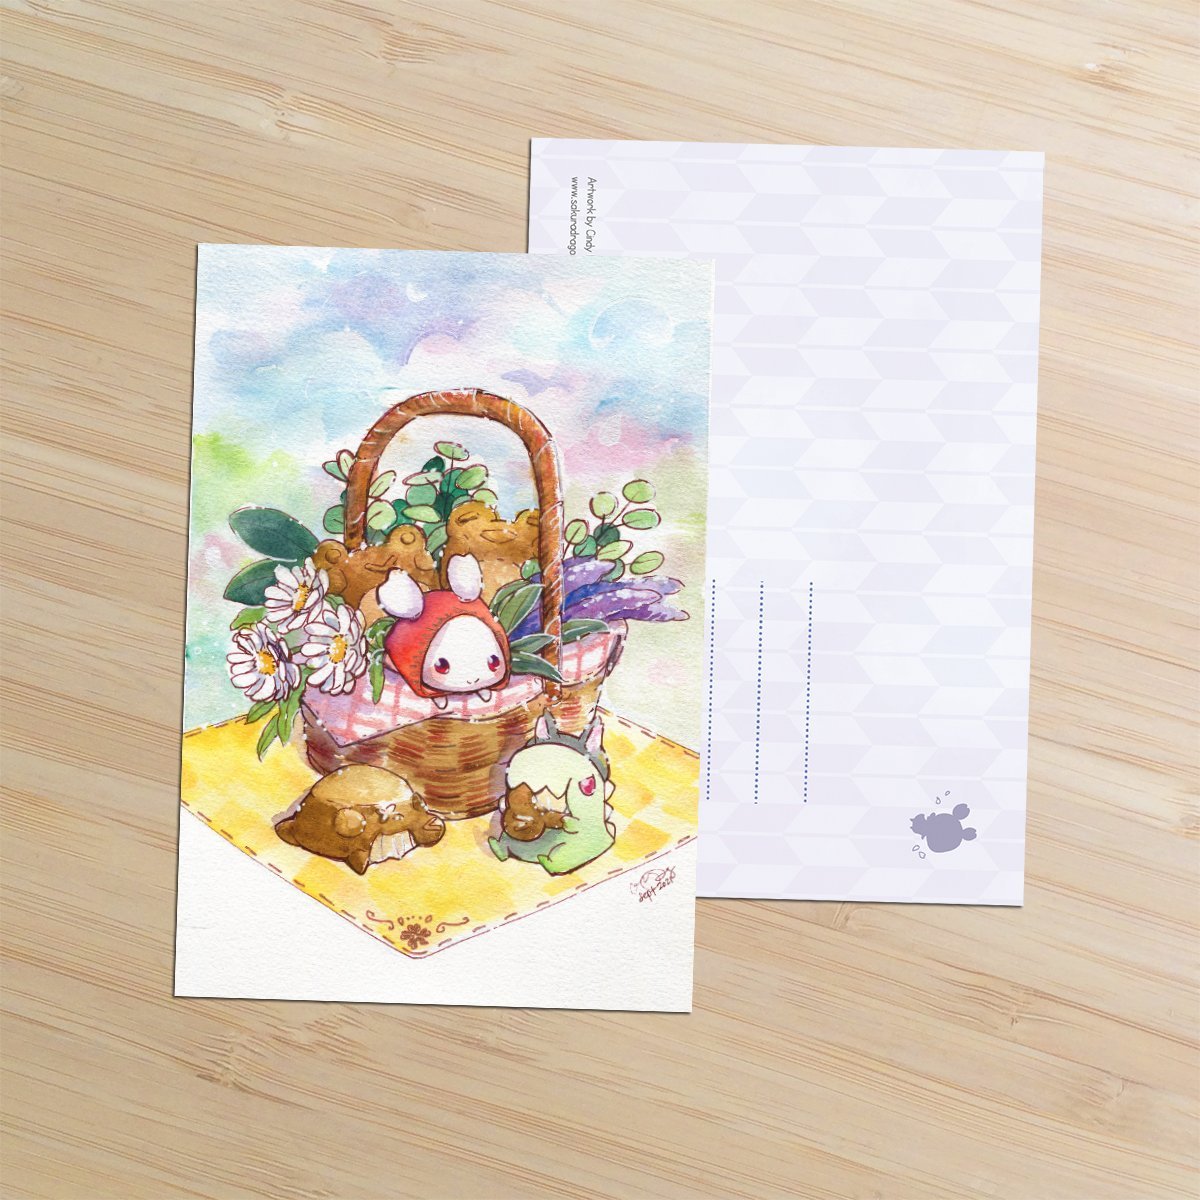 Fairy Tale Postcard Set - Sakuradragon